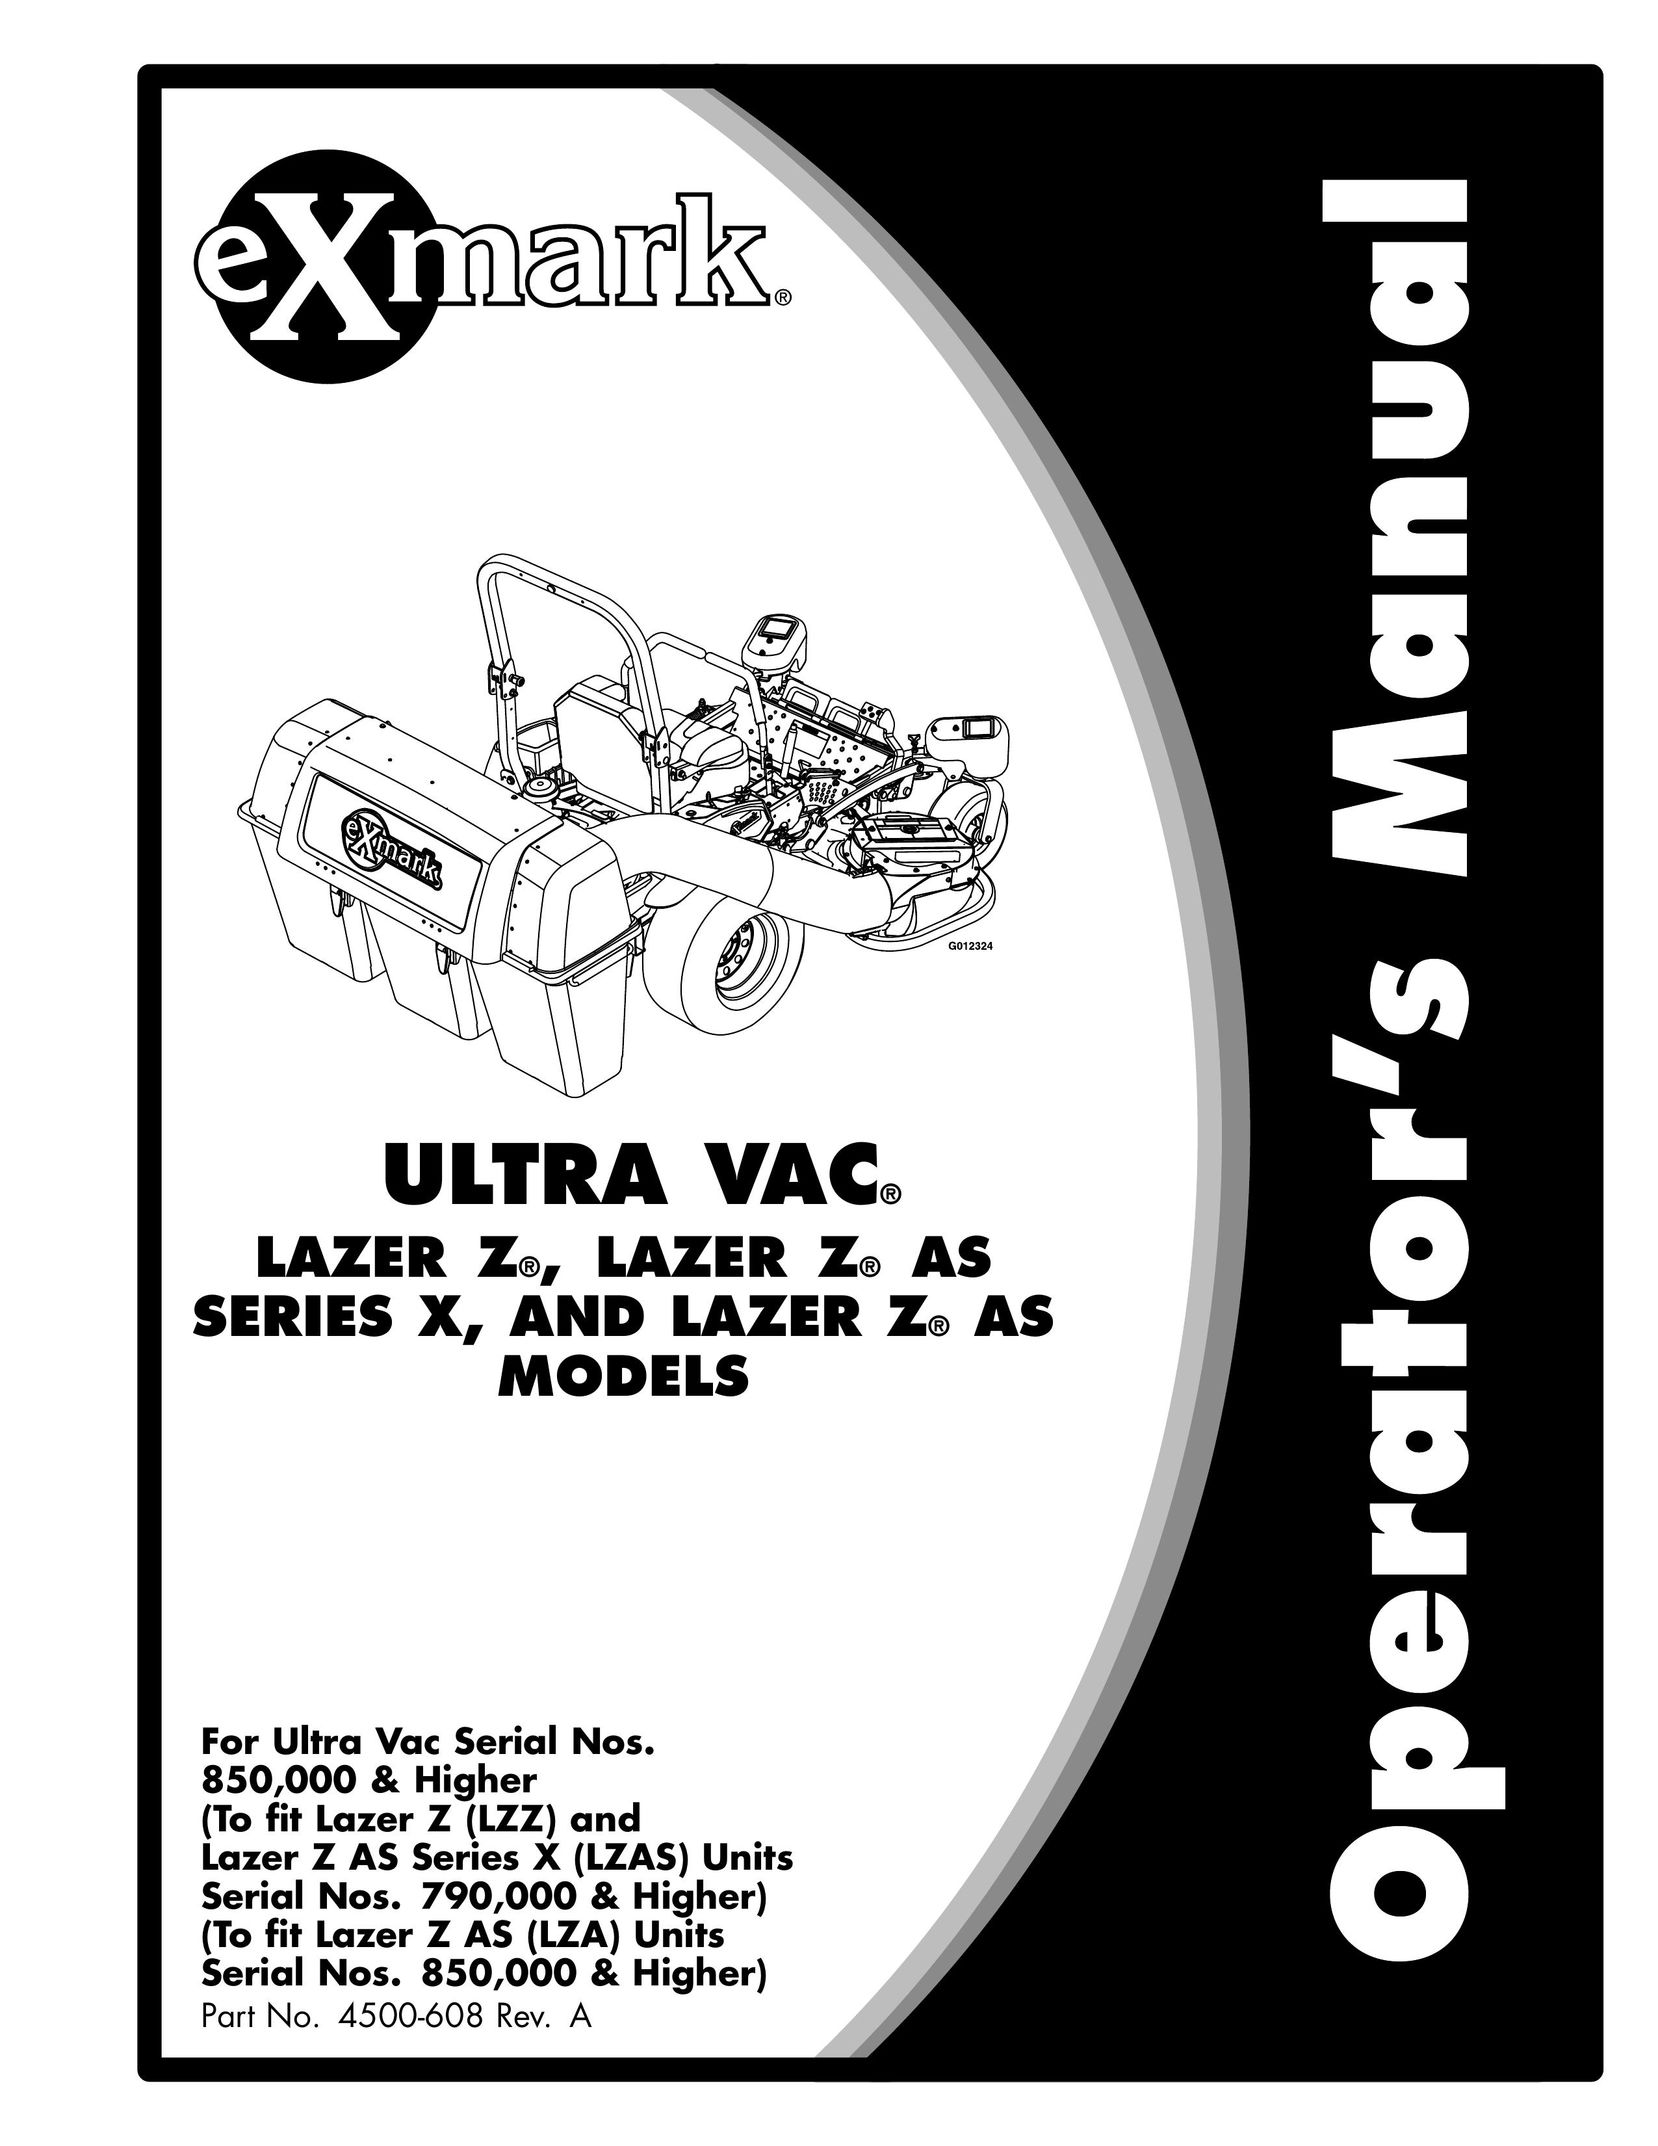 Exmark 000 & higher Vacuum Cleaner User Manual